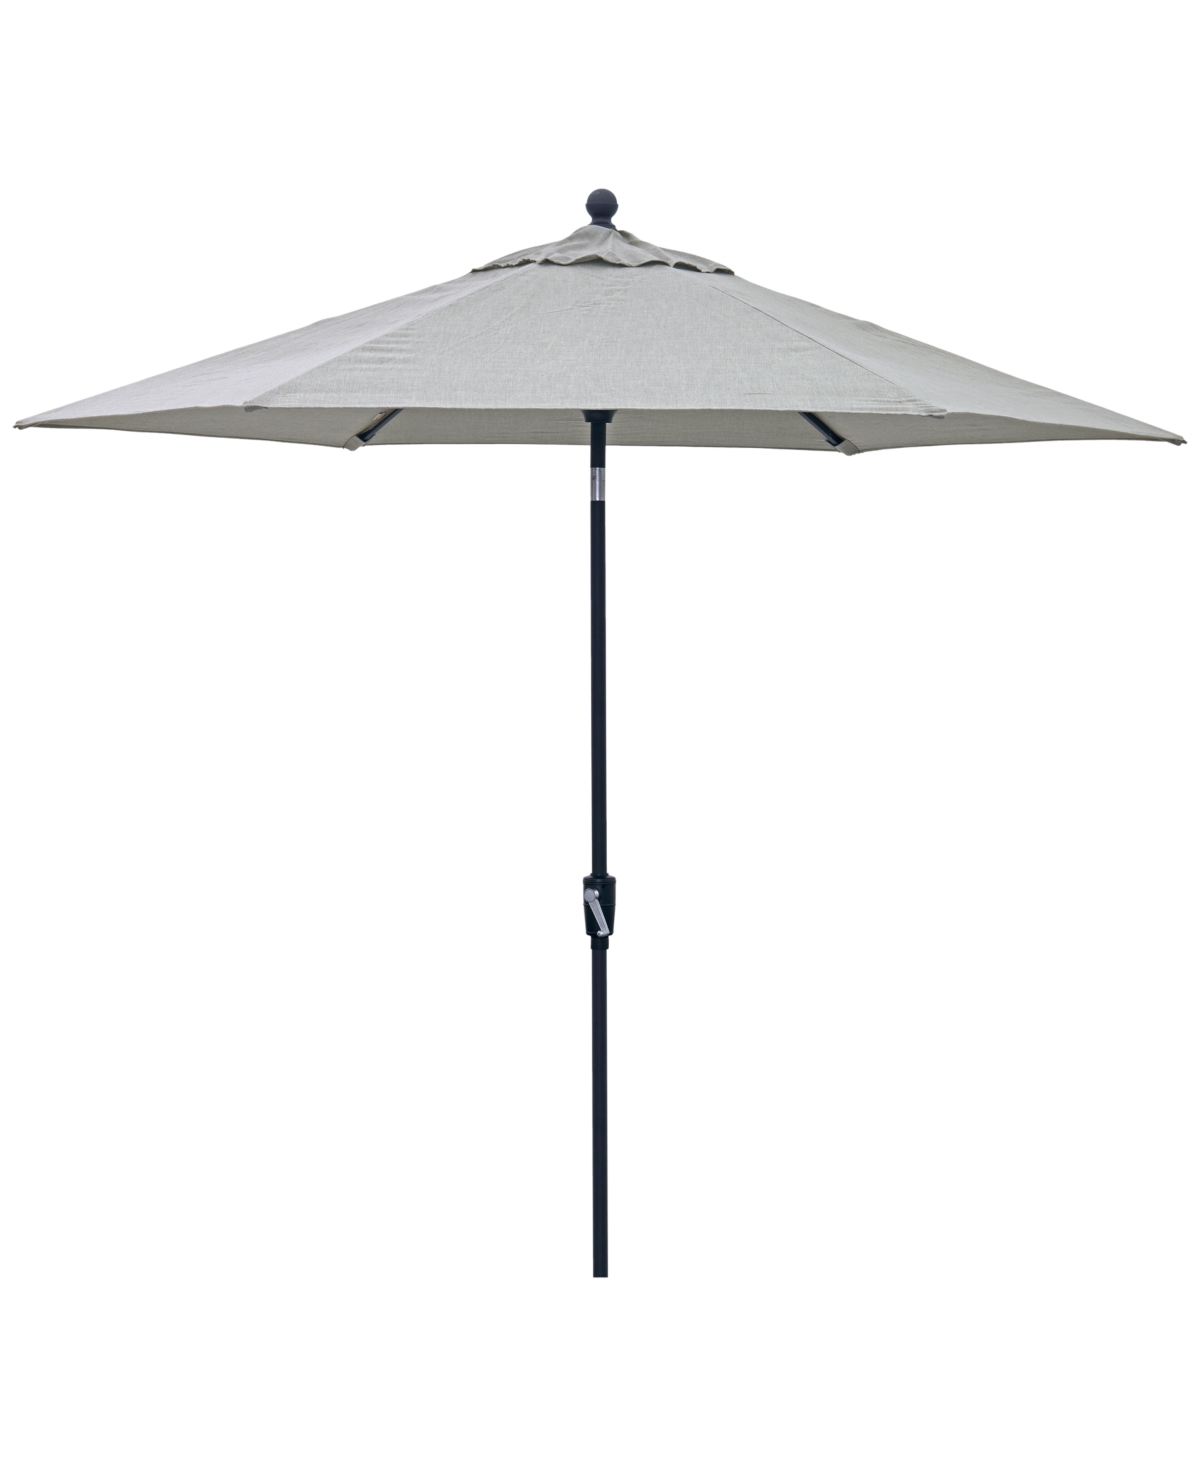 Agio Wythburn Mix And Match Fabric 9' Auto Tilt Umbrella In Oyster Light Grey,bronze Finish